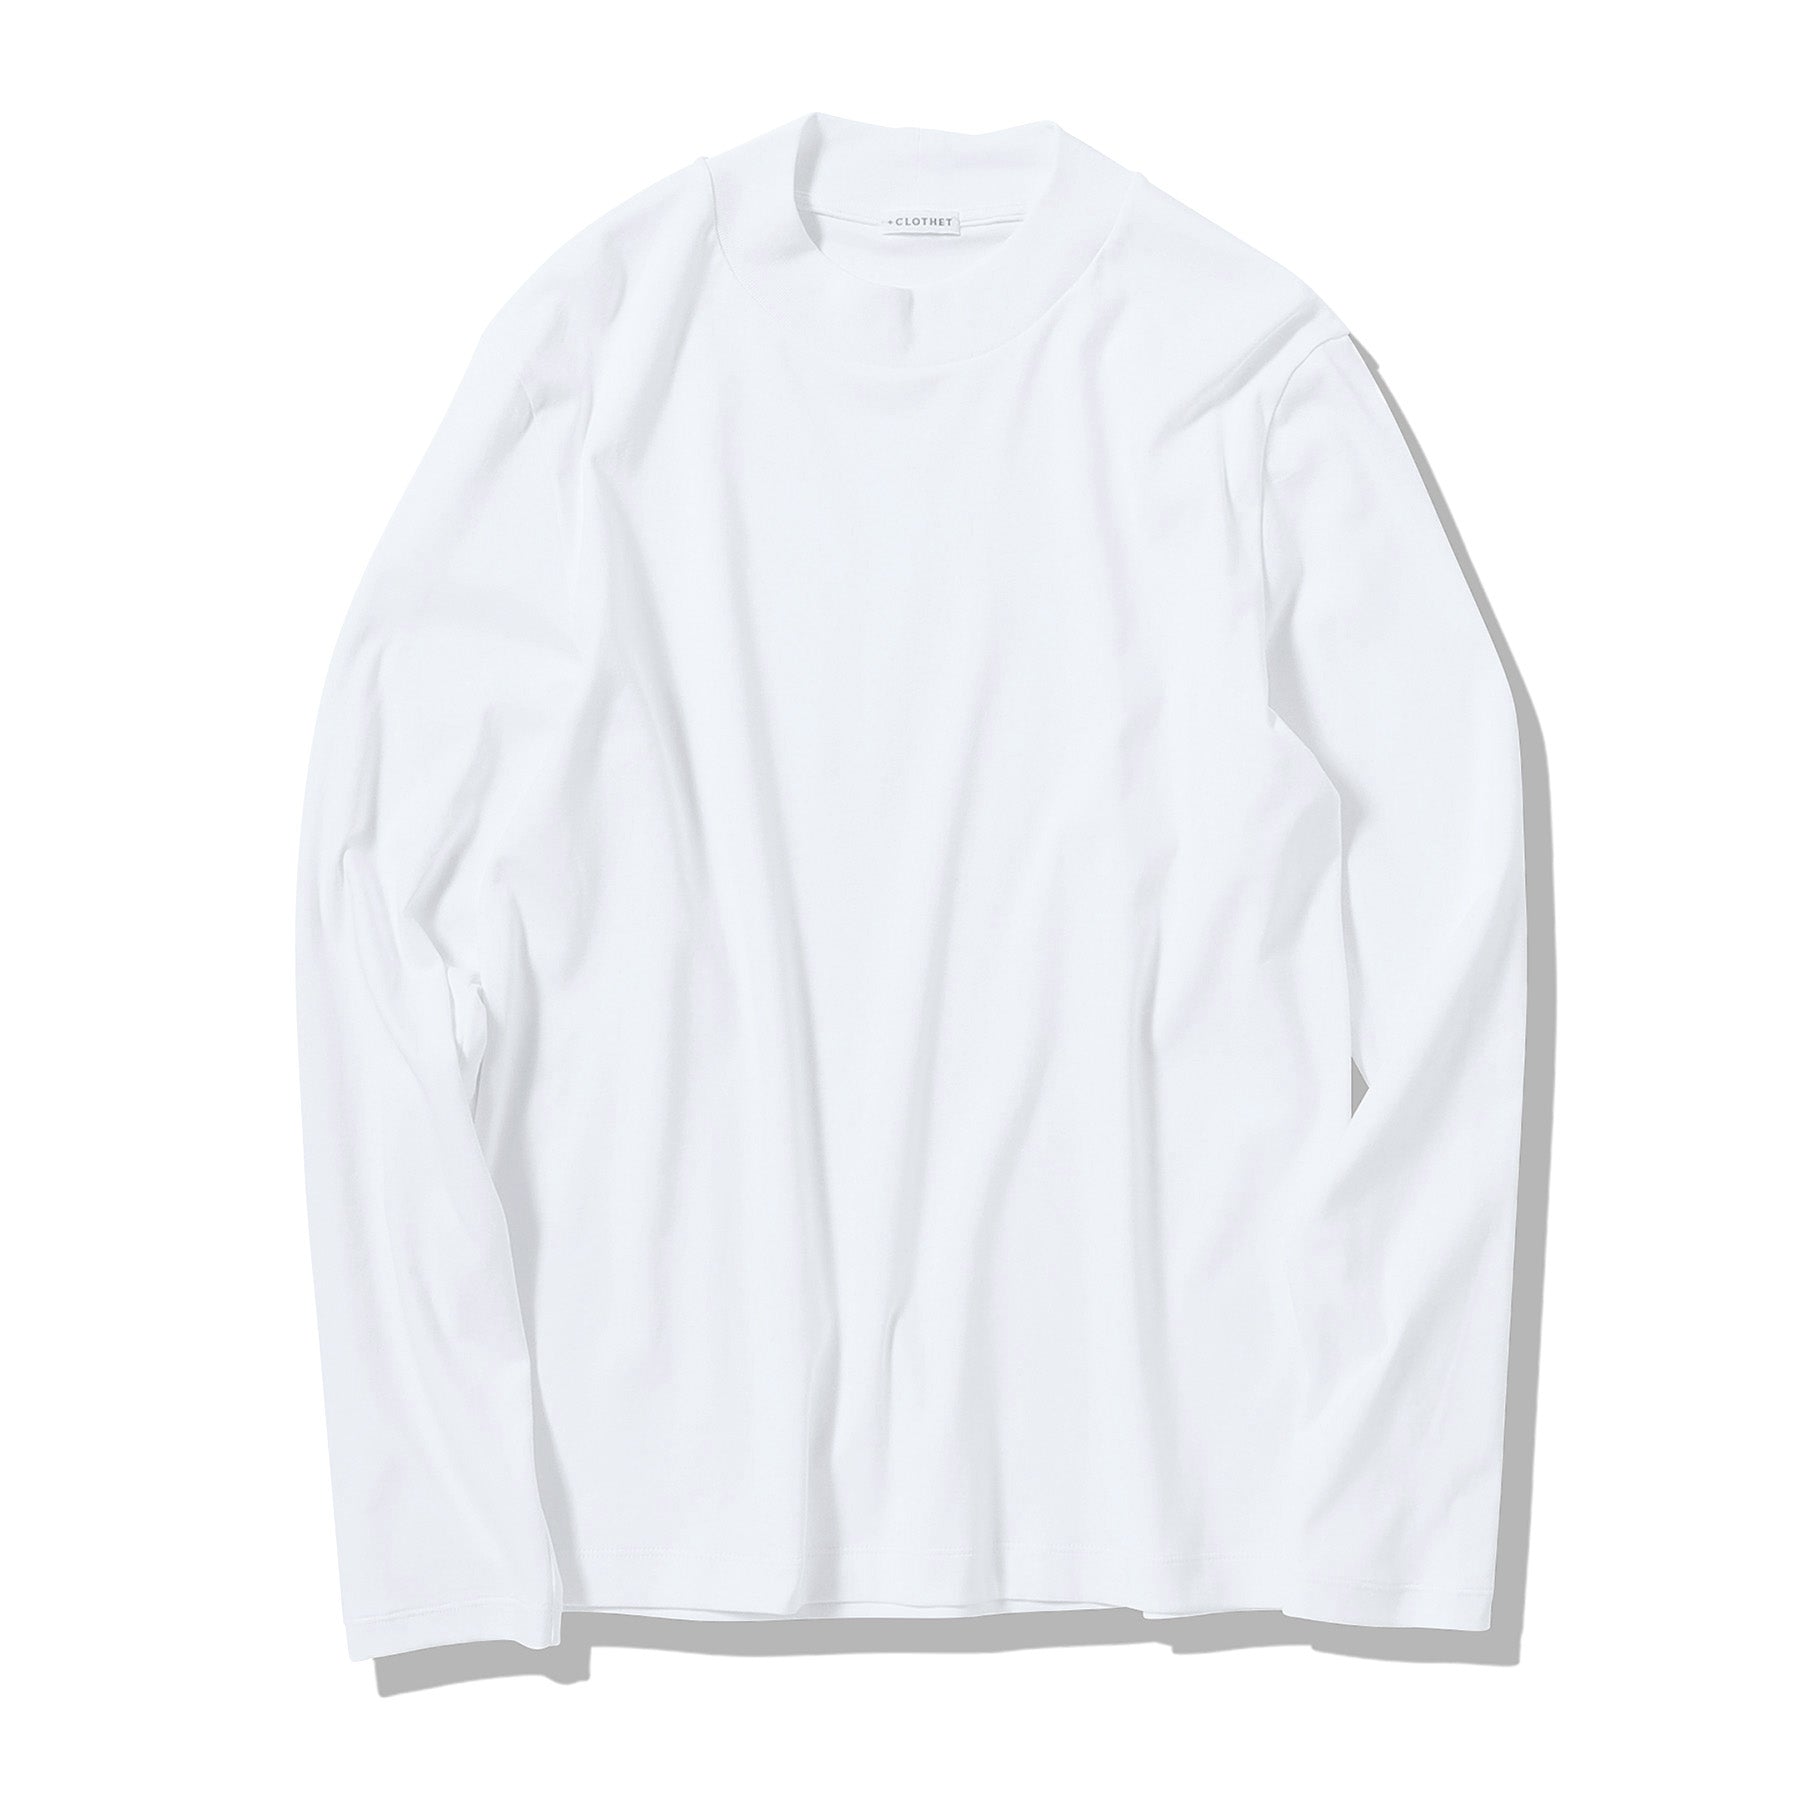 Tailored Mock Neck Long Sleeve T-shirtの商品画像